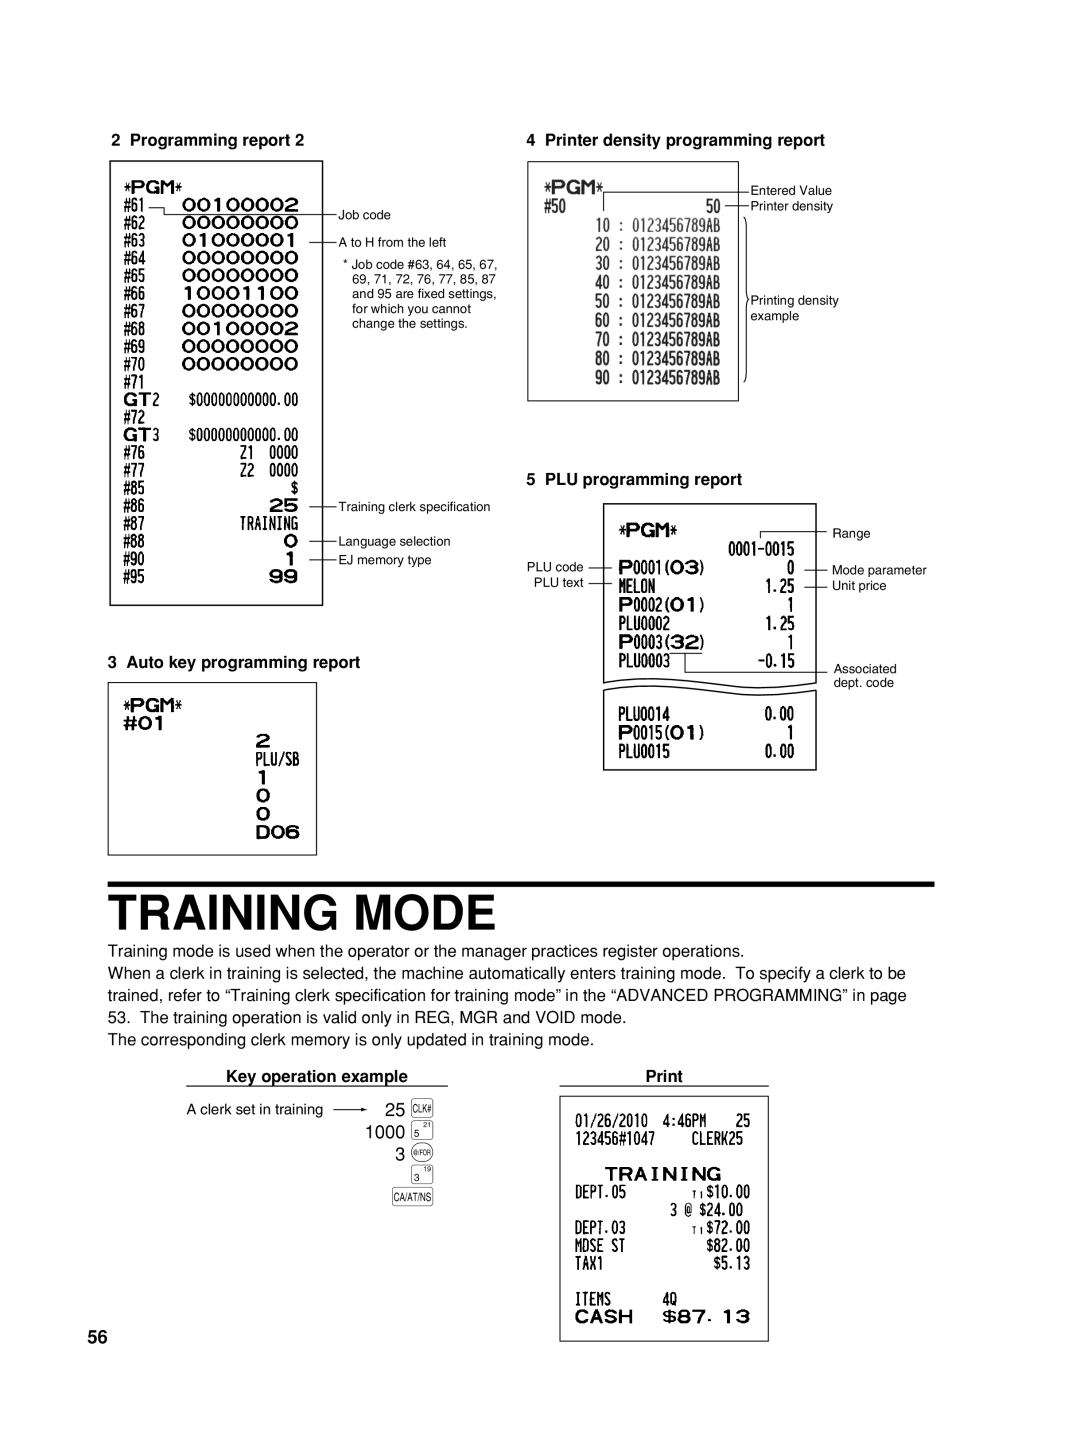 Sharp TINSZ2600RCZZ Training Mode, 3 @ # A, 25 L, 1000, Programming report, Printer density programming report 